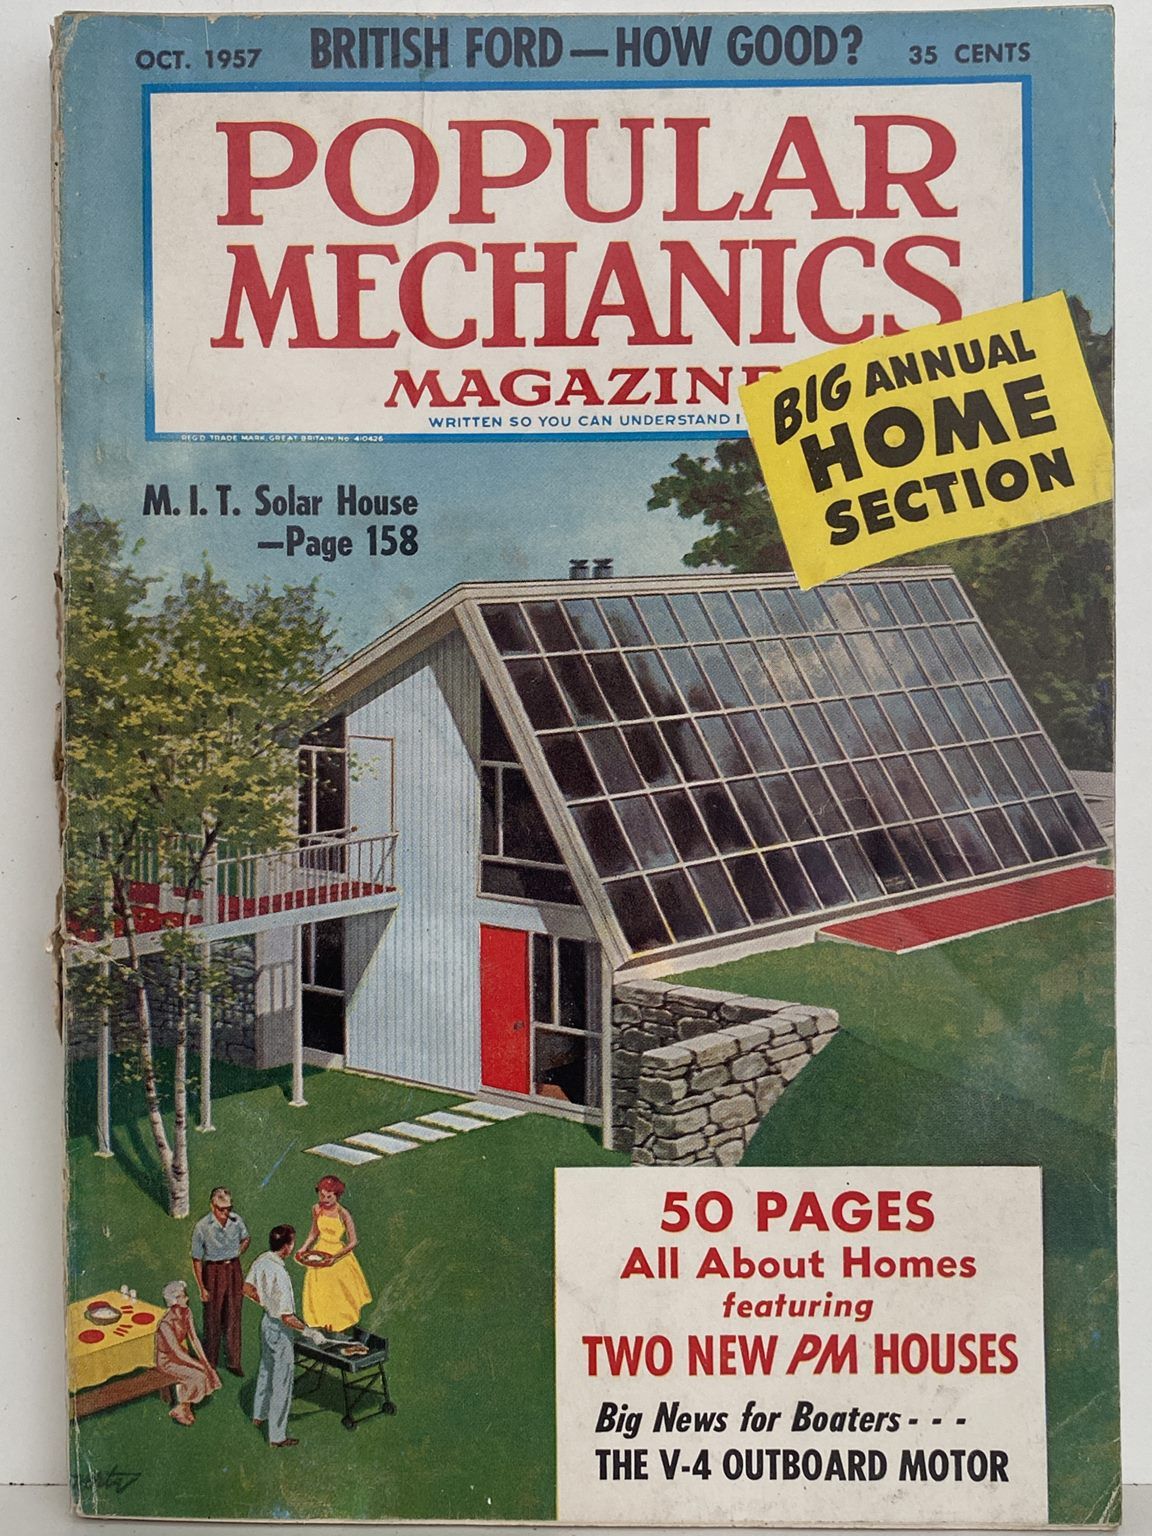 VINTAGE MAGAZINE: Popular Mechanics - Vol. 108, No. 4 - October 1957